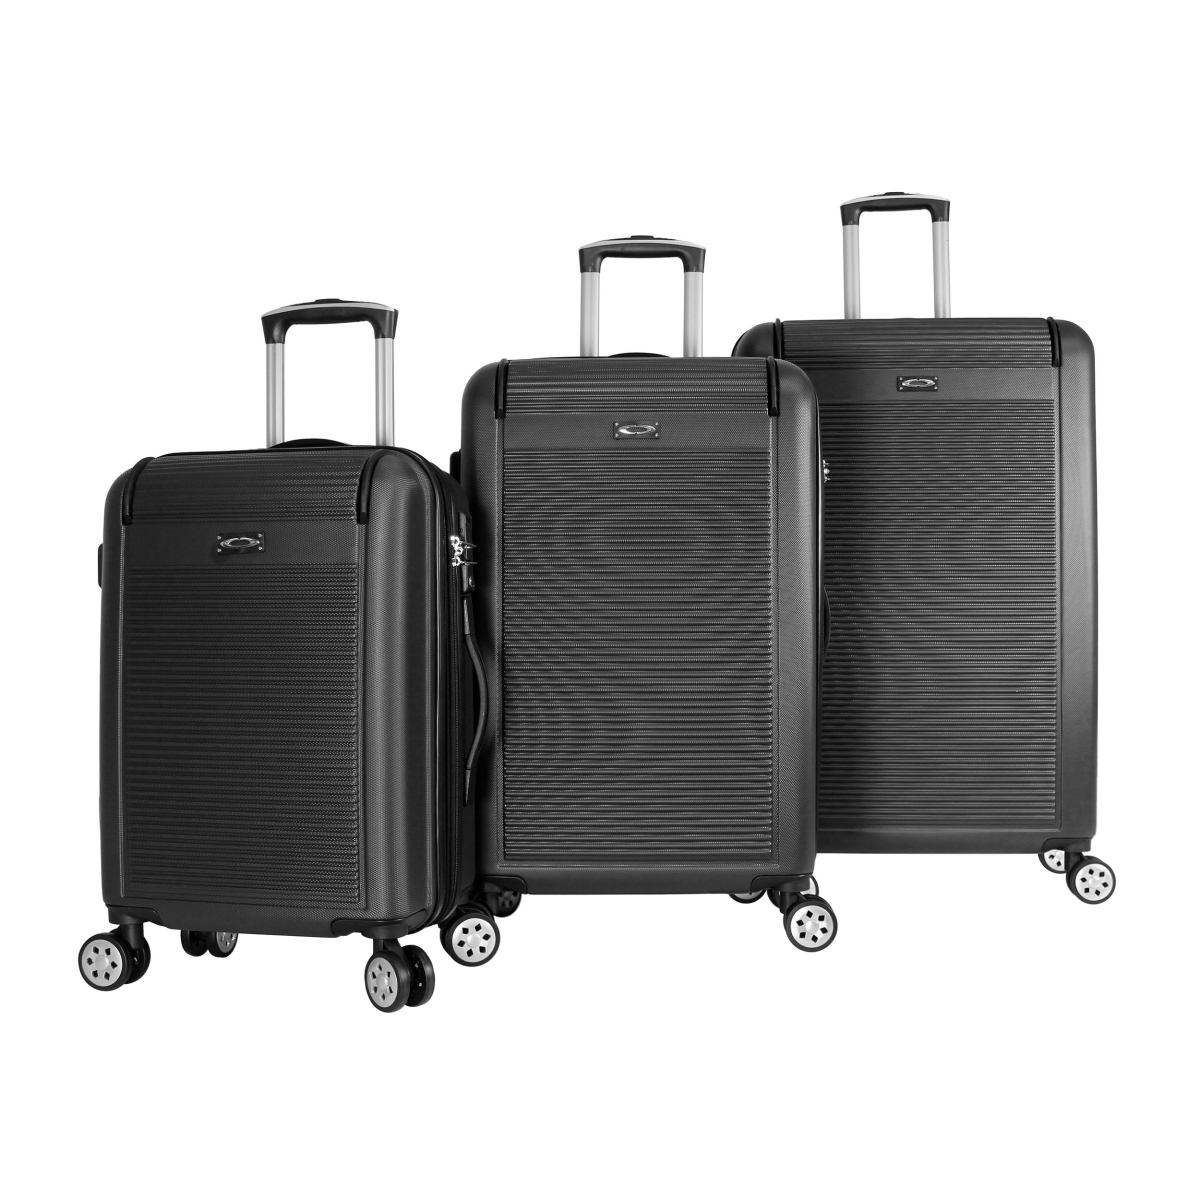 Wt75900-blk 3 Piece Hardside Spinner Luggage Set With Tsa Lock, Black